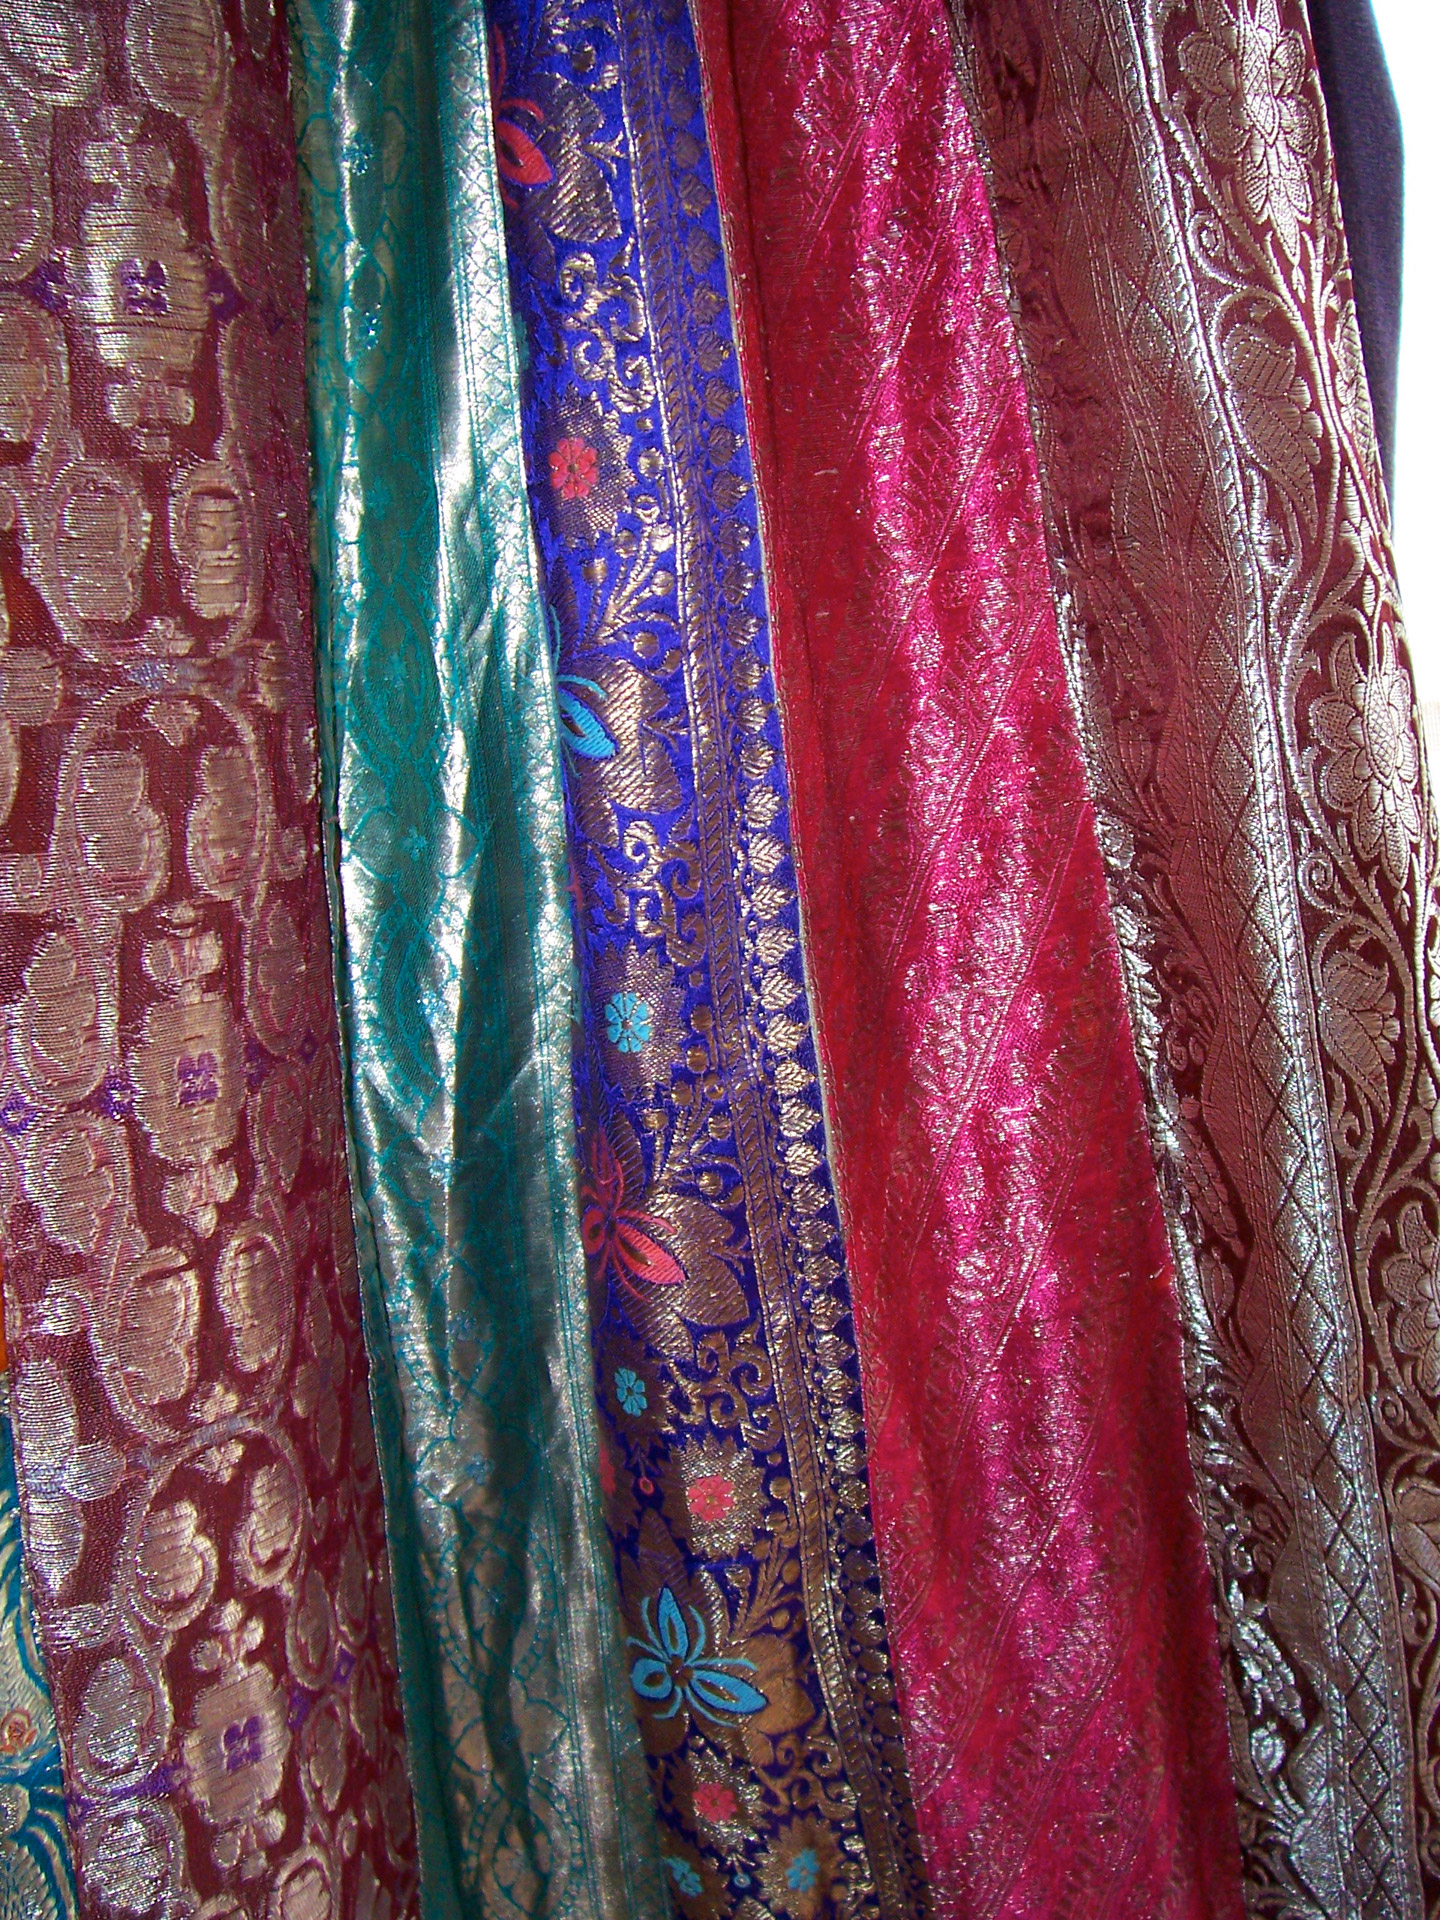 sari fabric drapes free photo